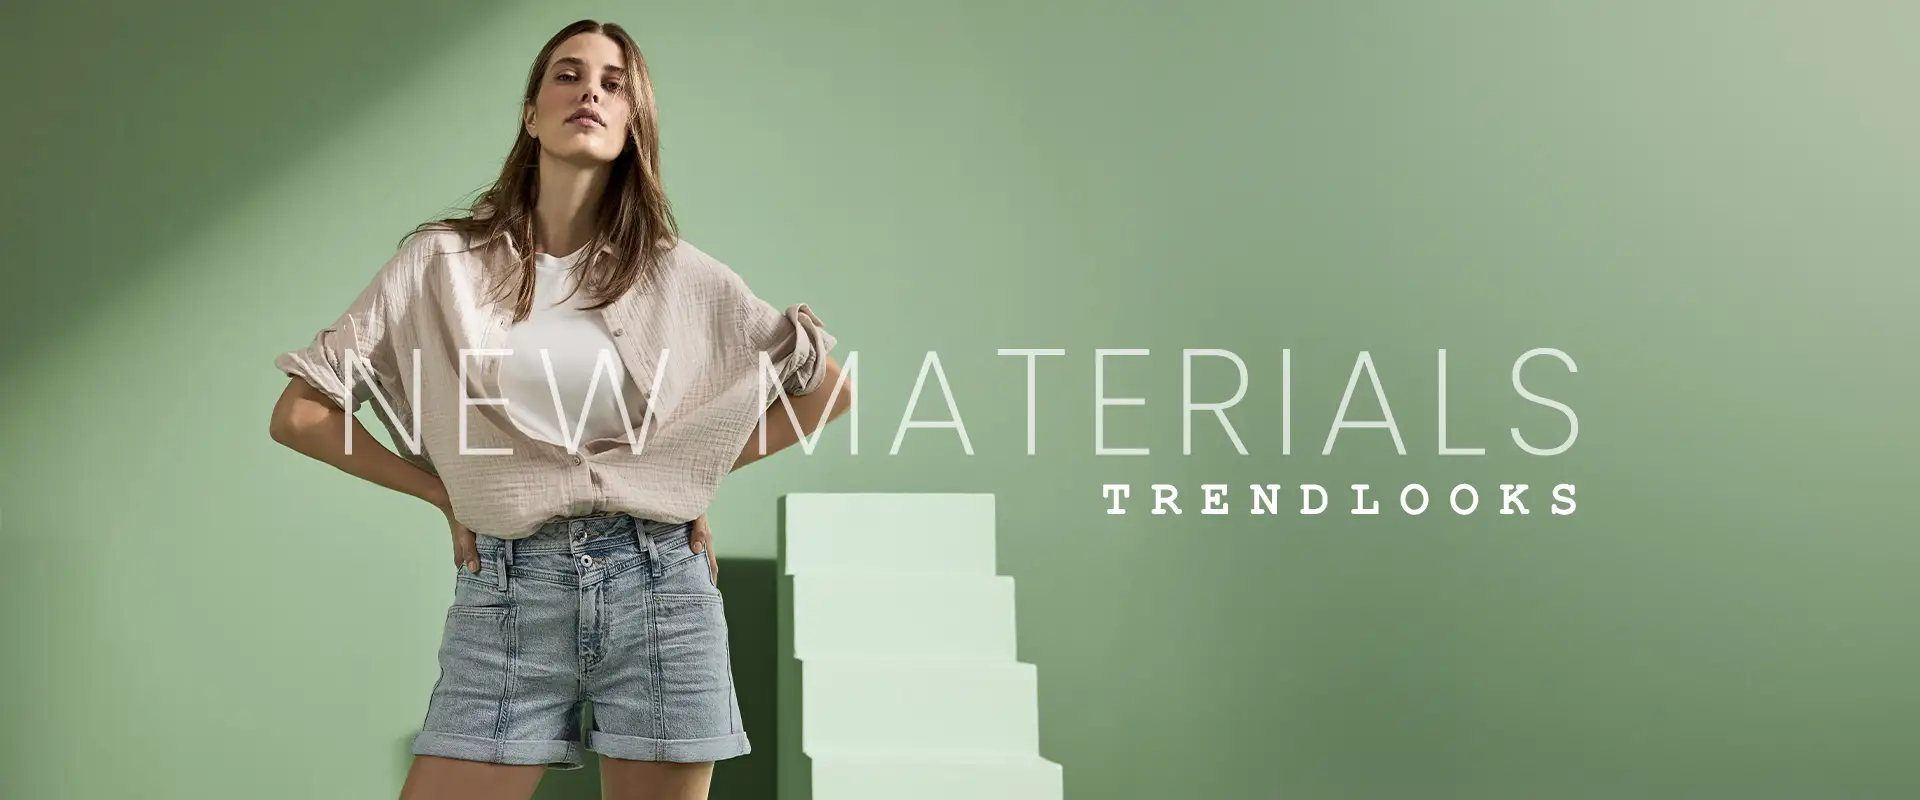 New materials – trendlooks